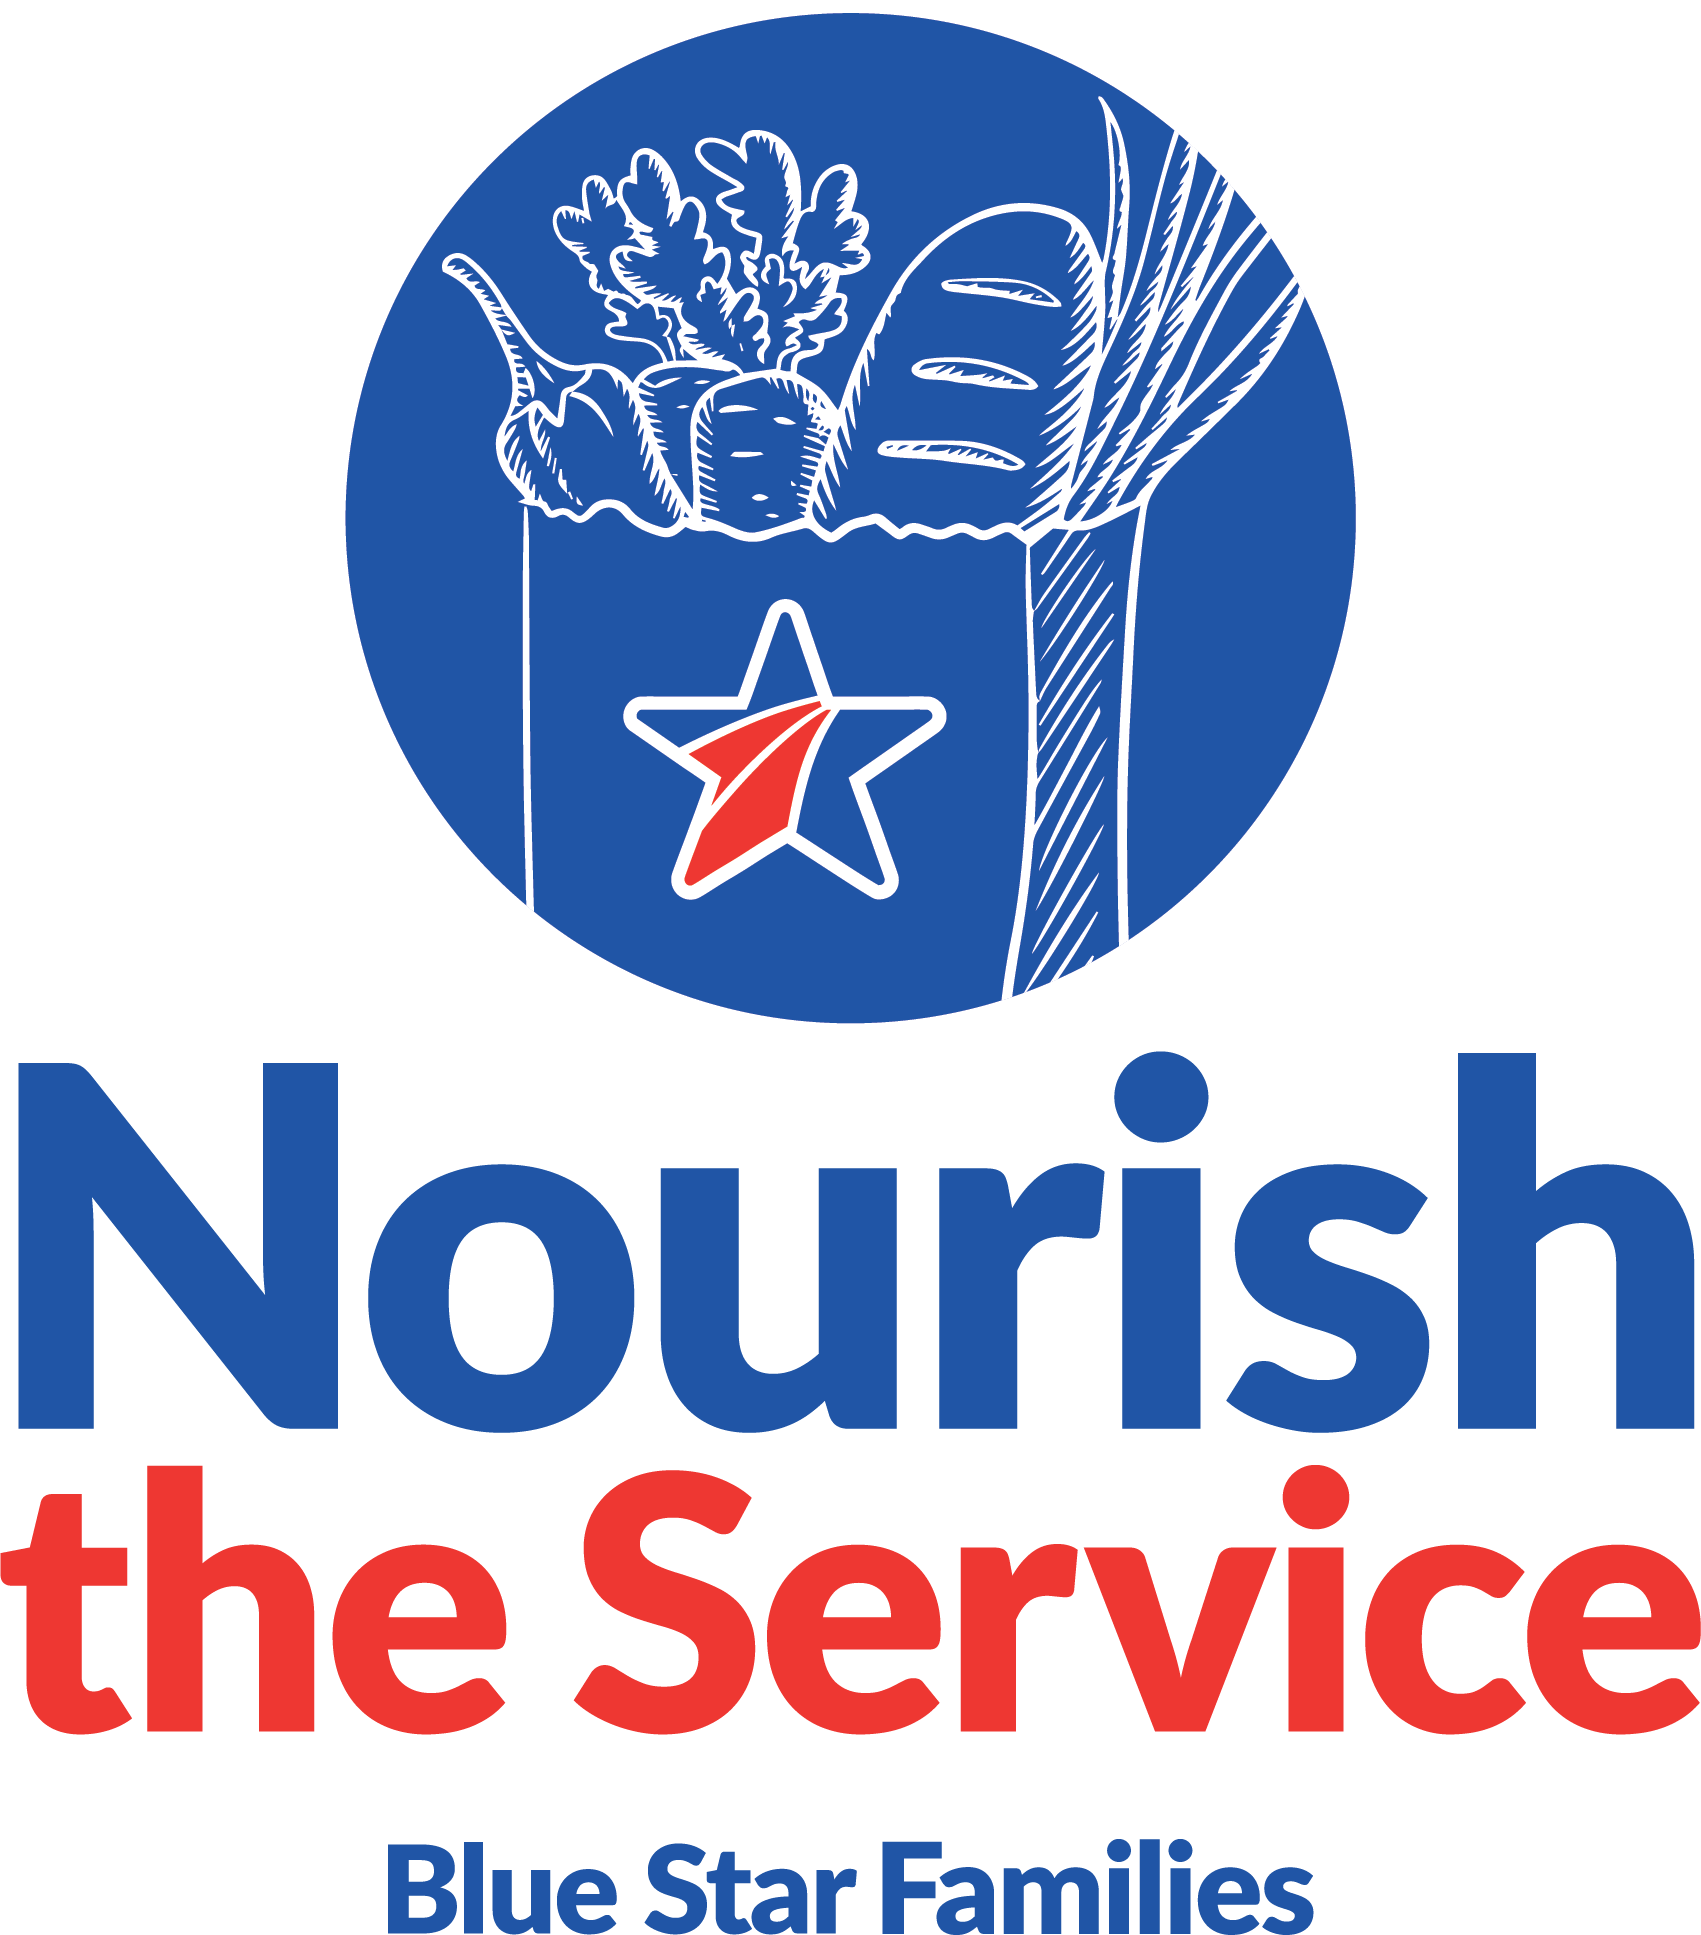 Nourish the Service